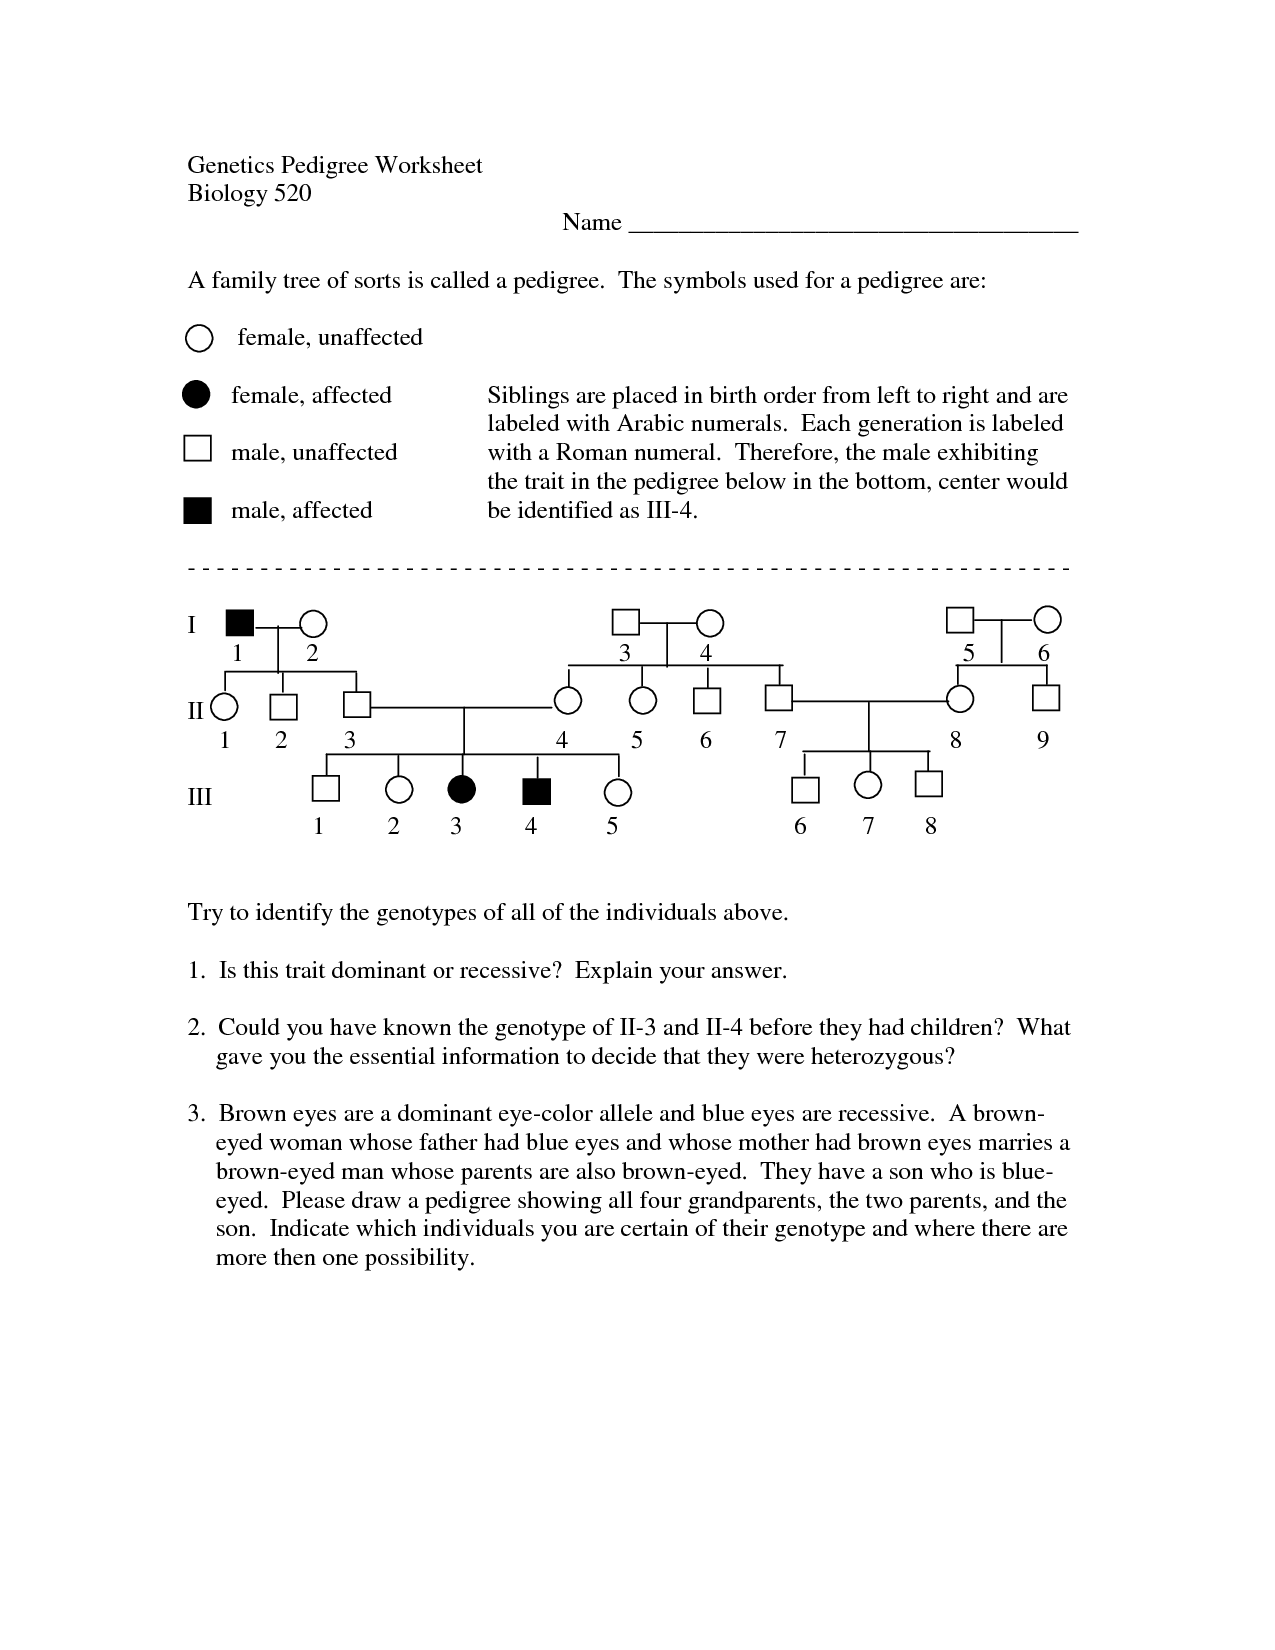 Genetic Pedigree Worksheet with Answer Key Image